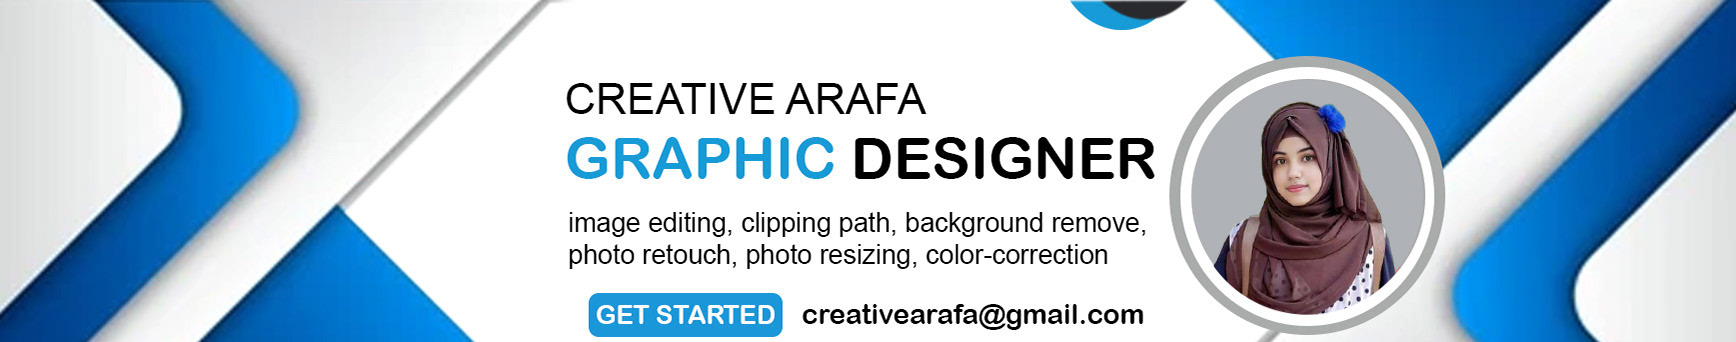 Profielbanner van creative arafa